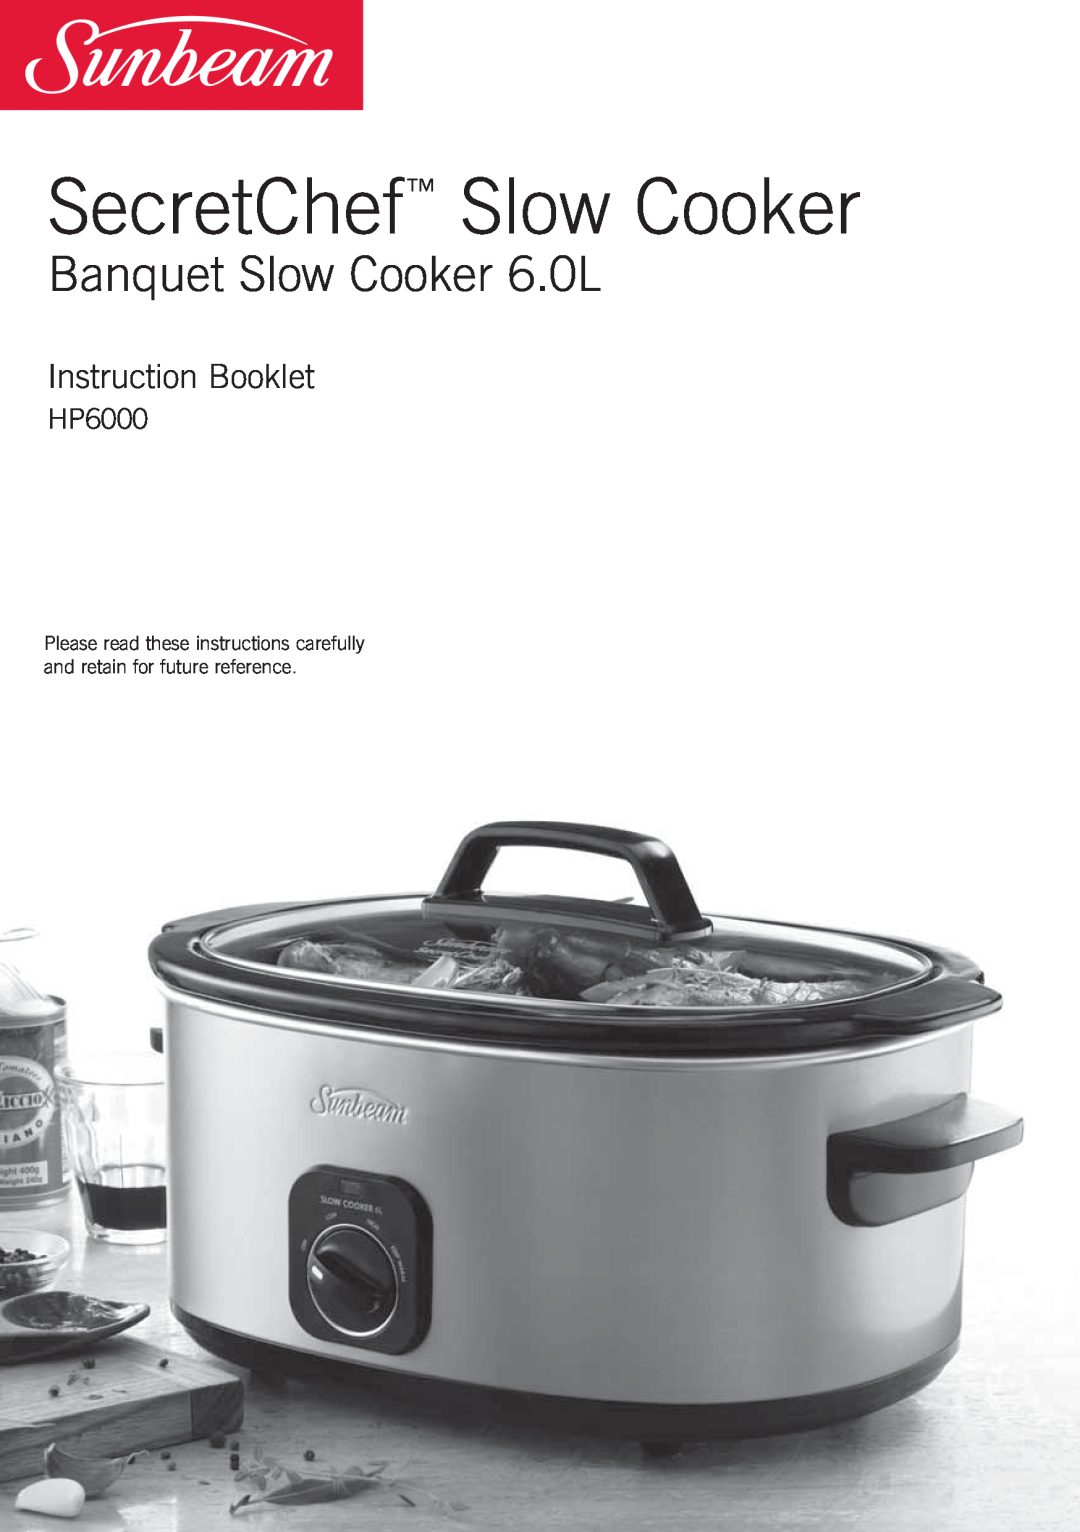 Sunbeam HP6000 manual SecretChef Slow Cooker, Banquet Slow Cooker 6.0L, Instruction Booklet 